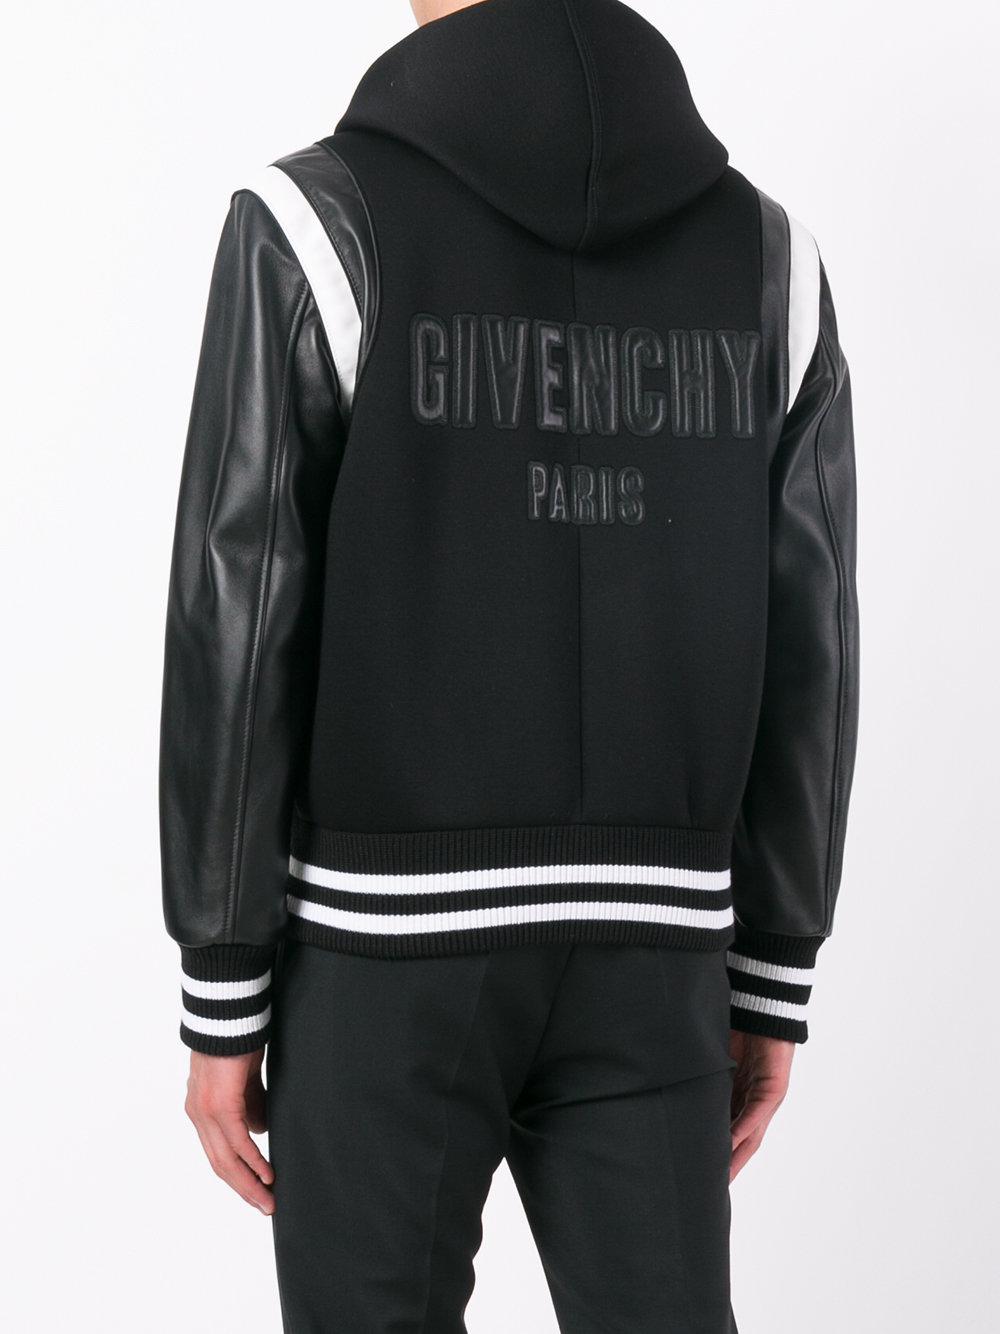 Givenchy Hooded Varsity Jacket in Black for Men - Lyst